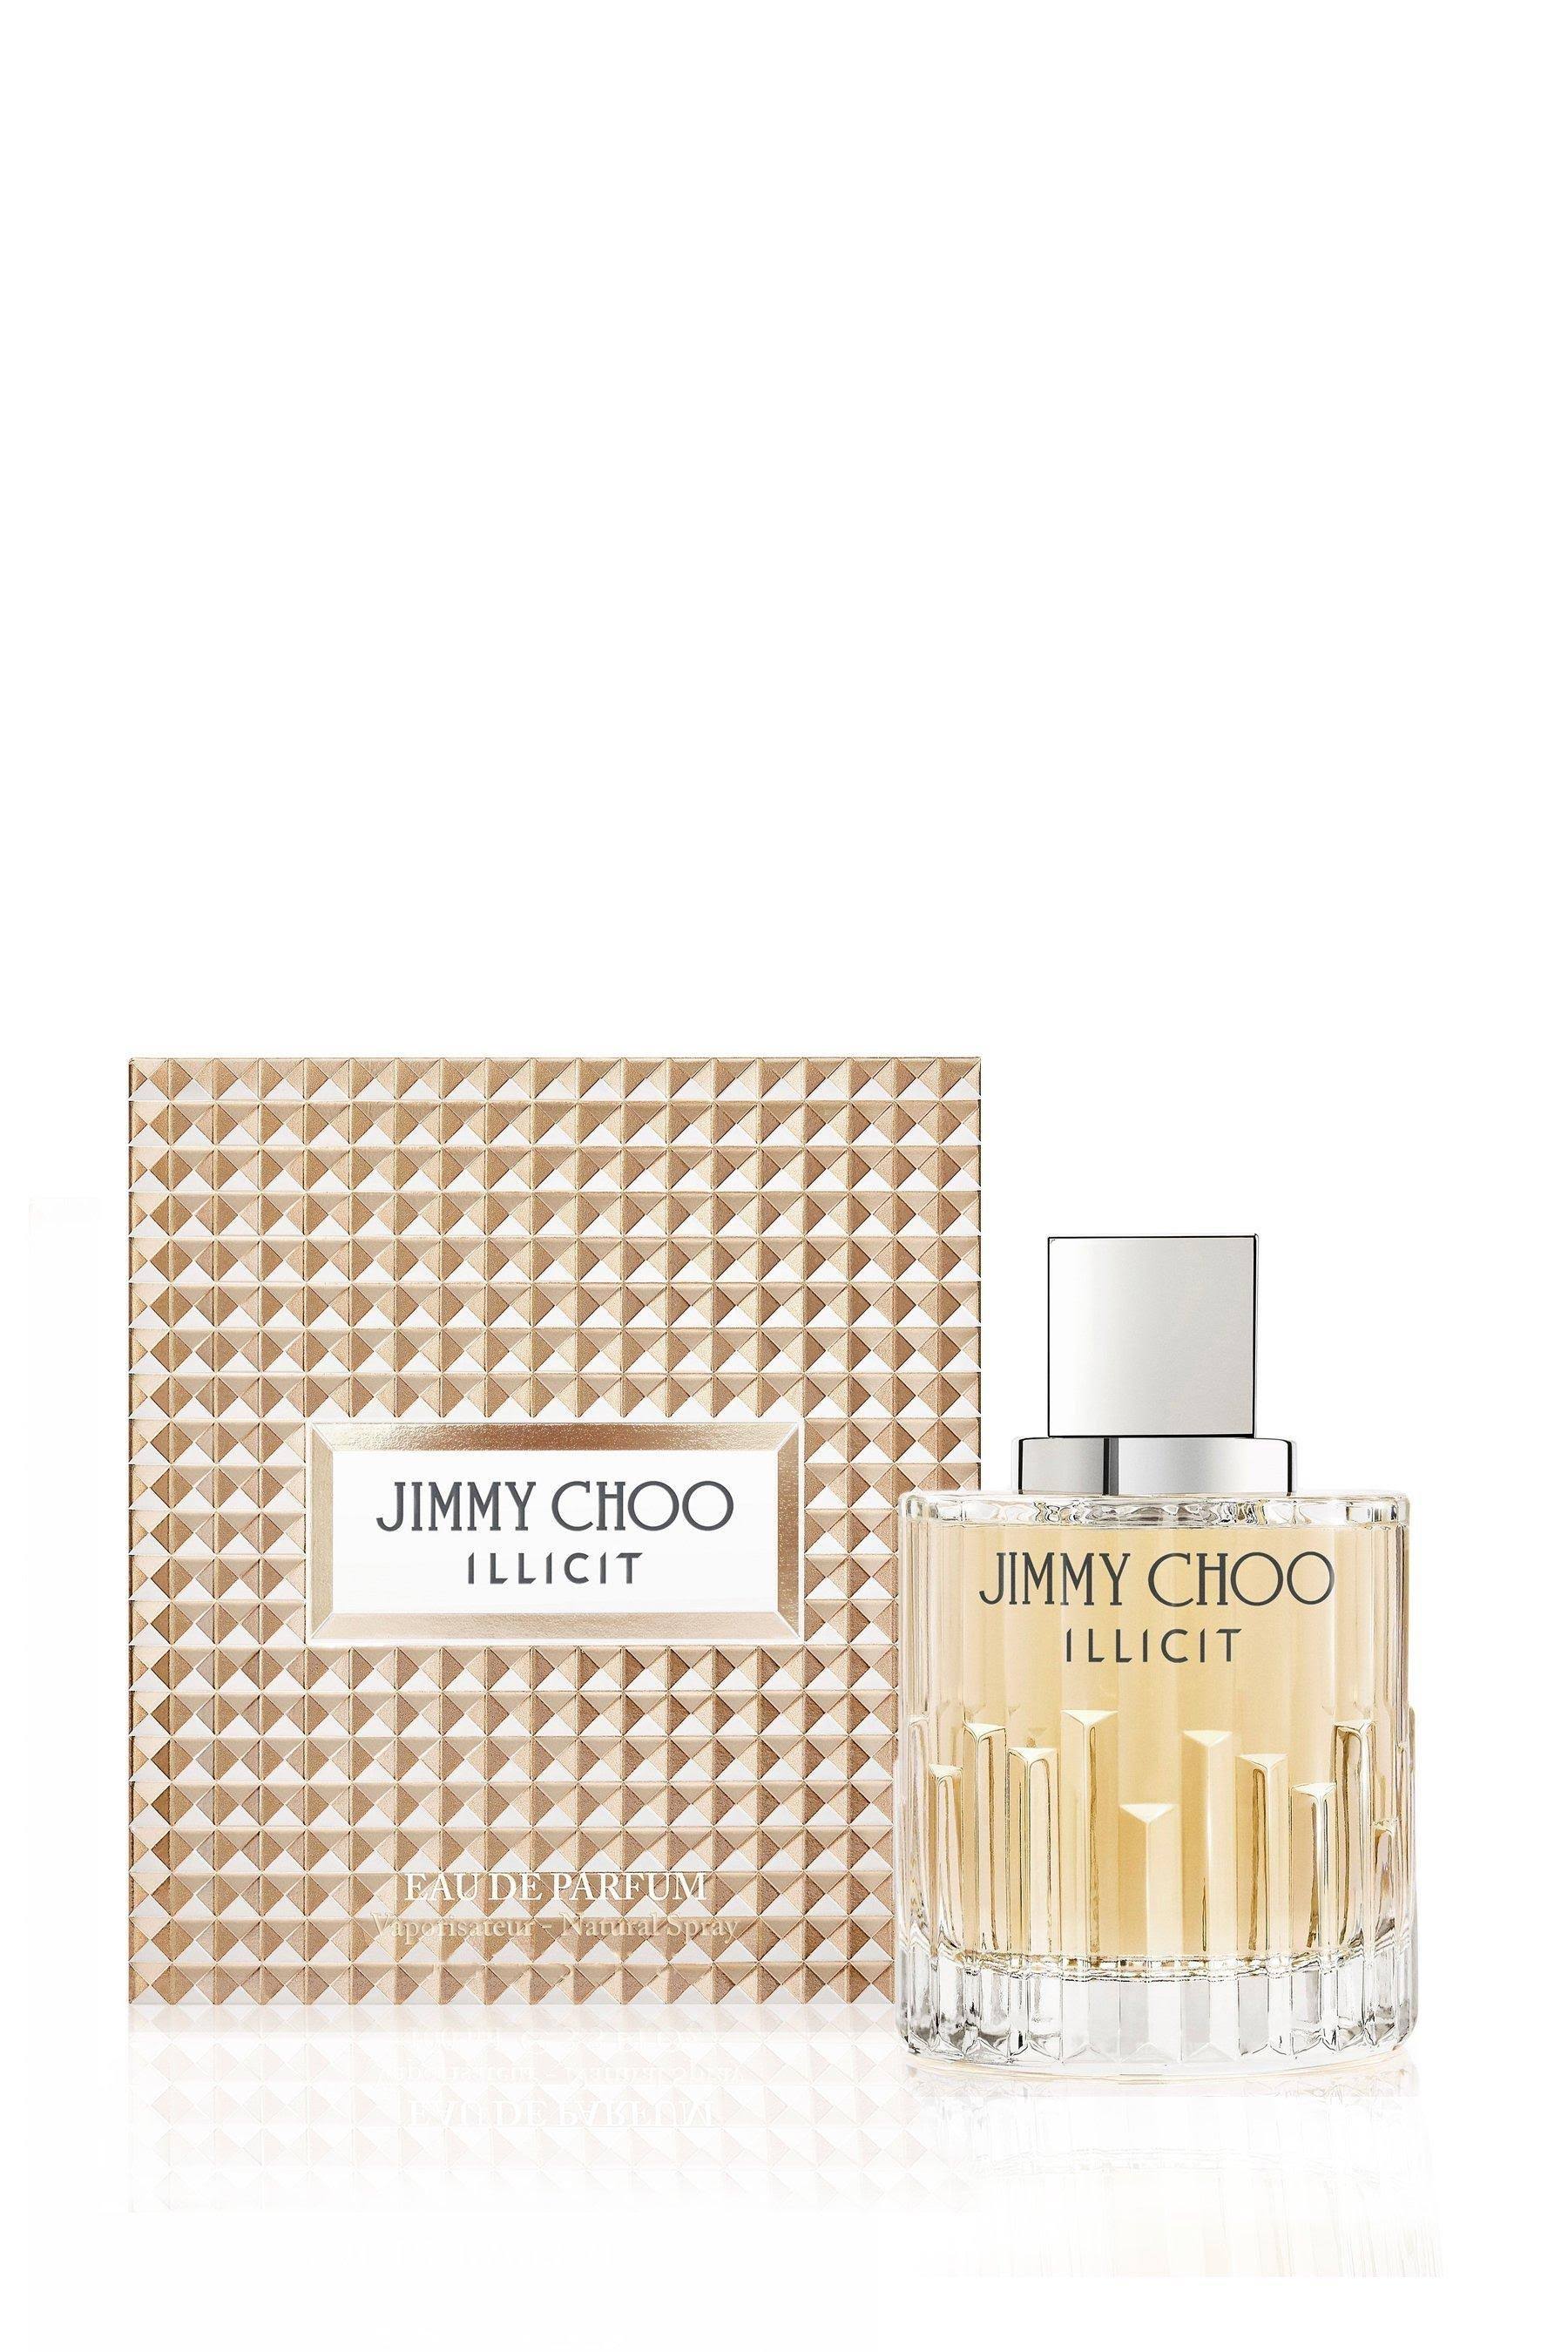 Jimmy Choo Illicit Eau De Parfum Spray 40 ml